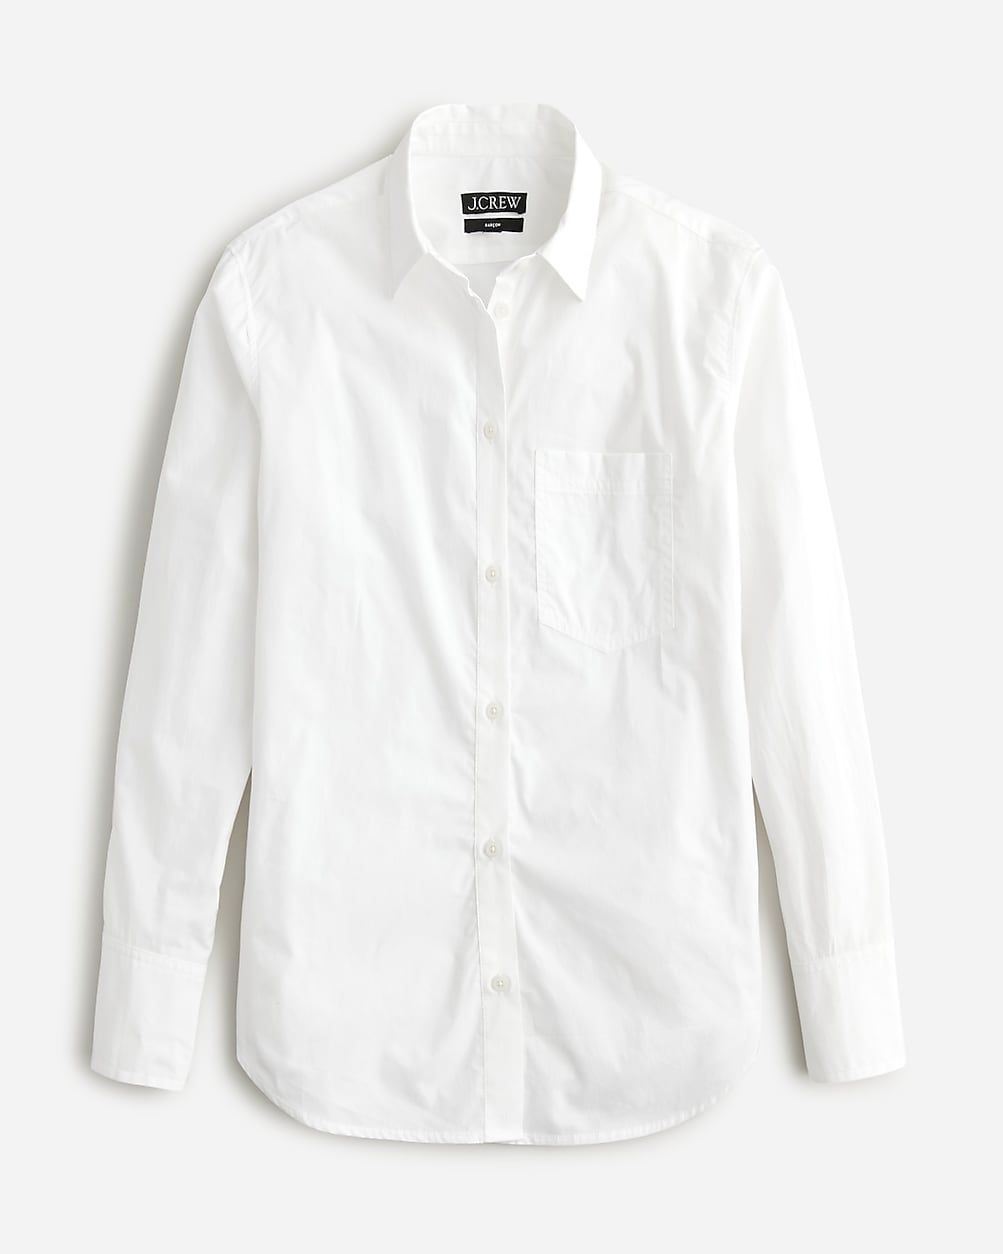 Petite garçon classic shirt in cotton poplin | J.Crew US